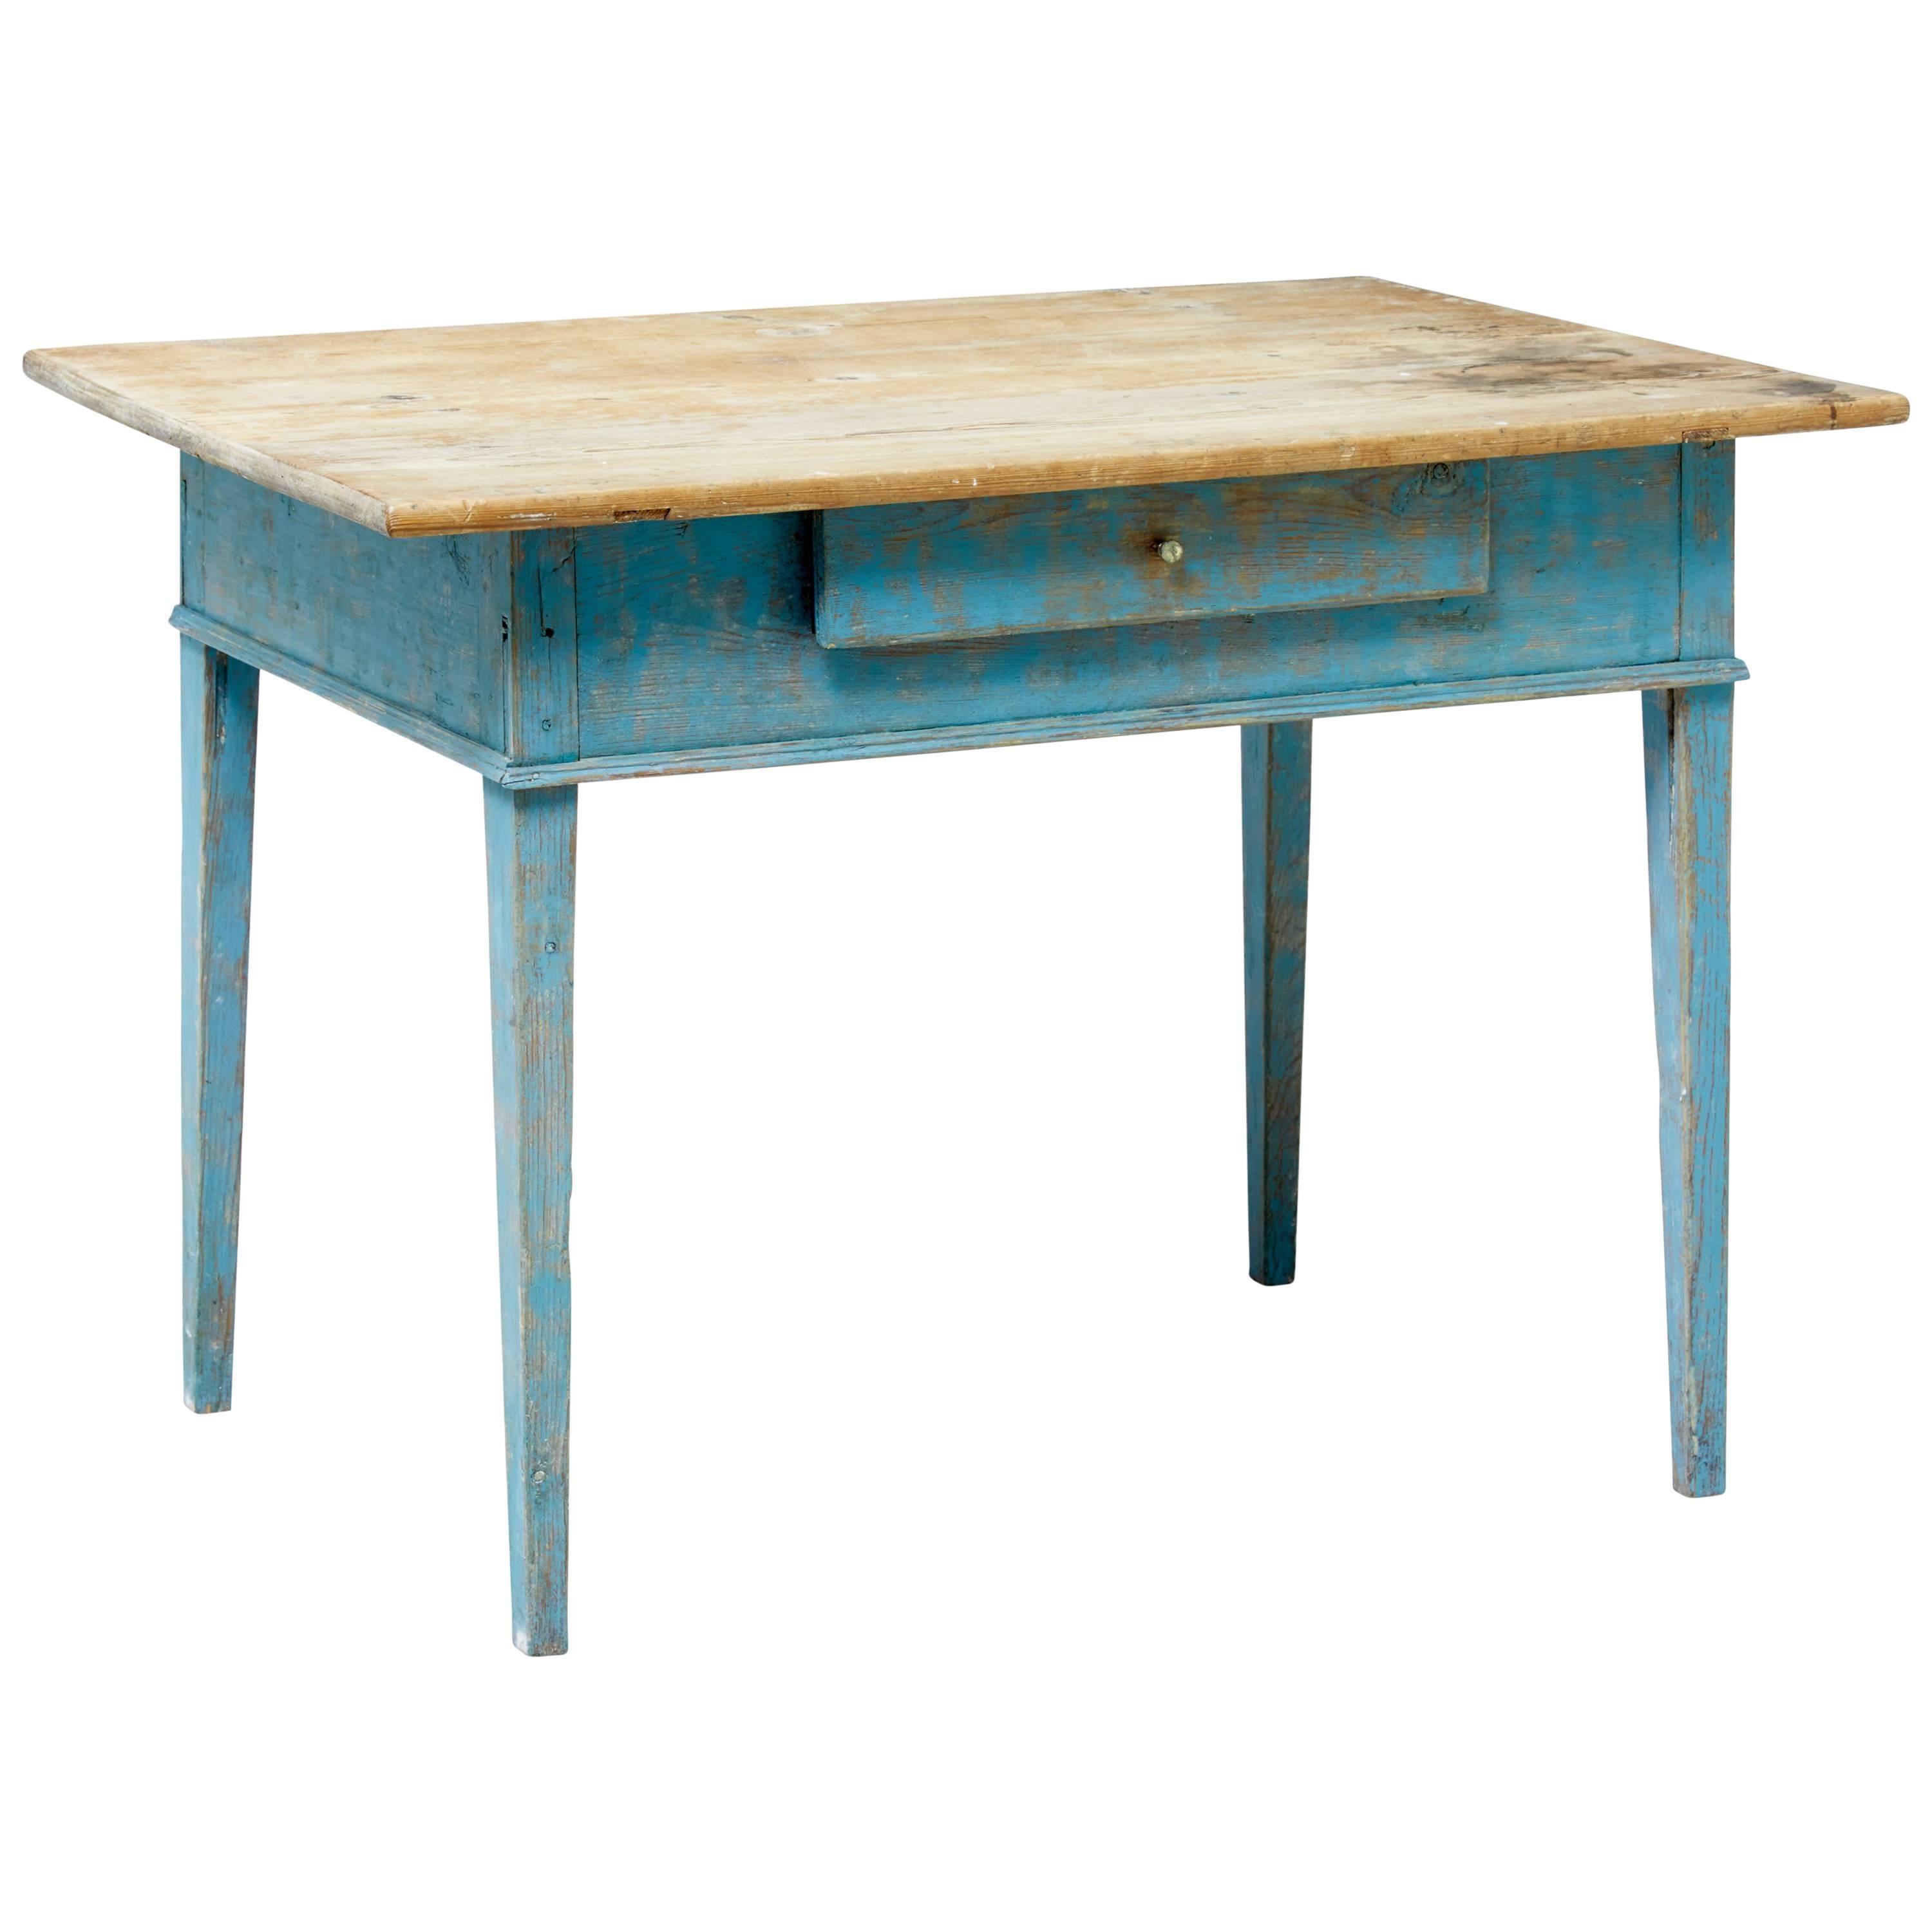 19th Century Rustic Swedish Painted Pine Table